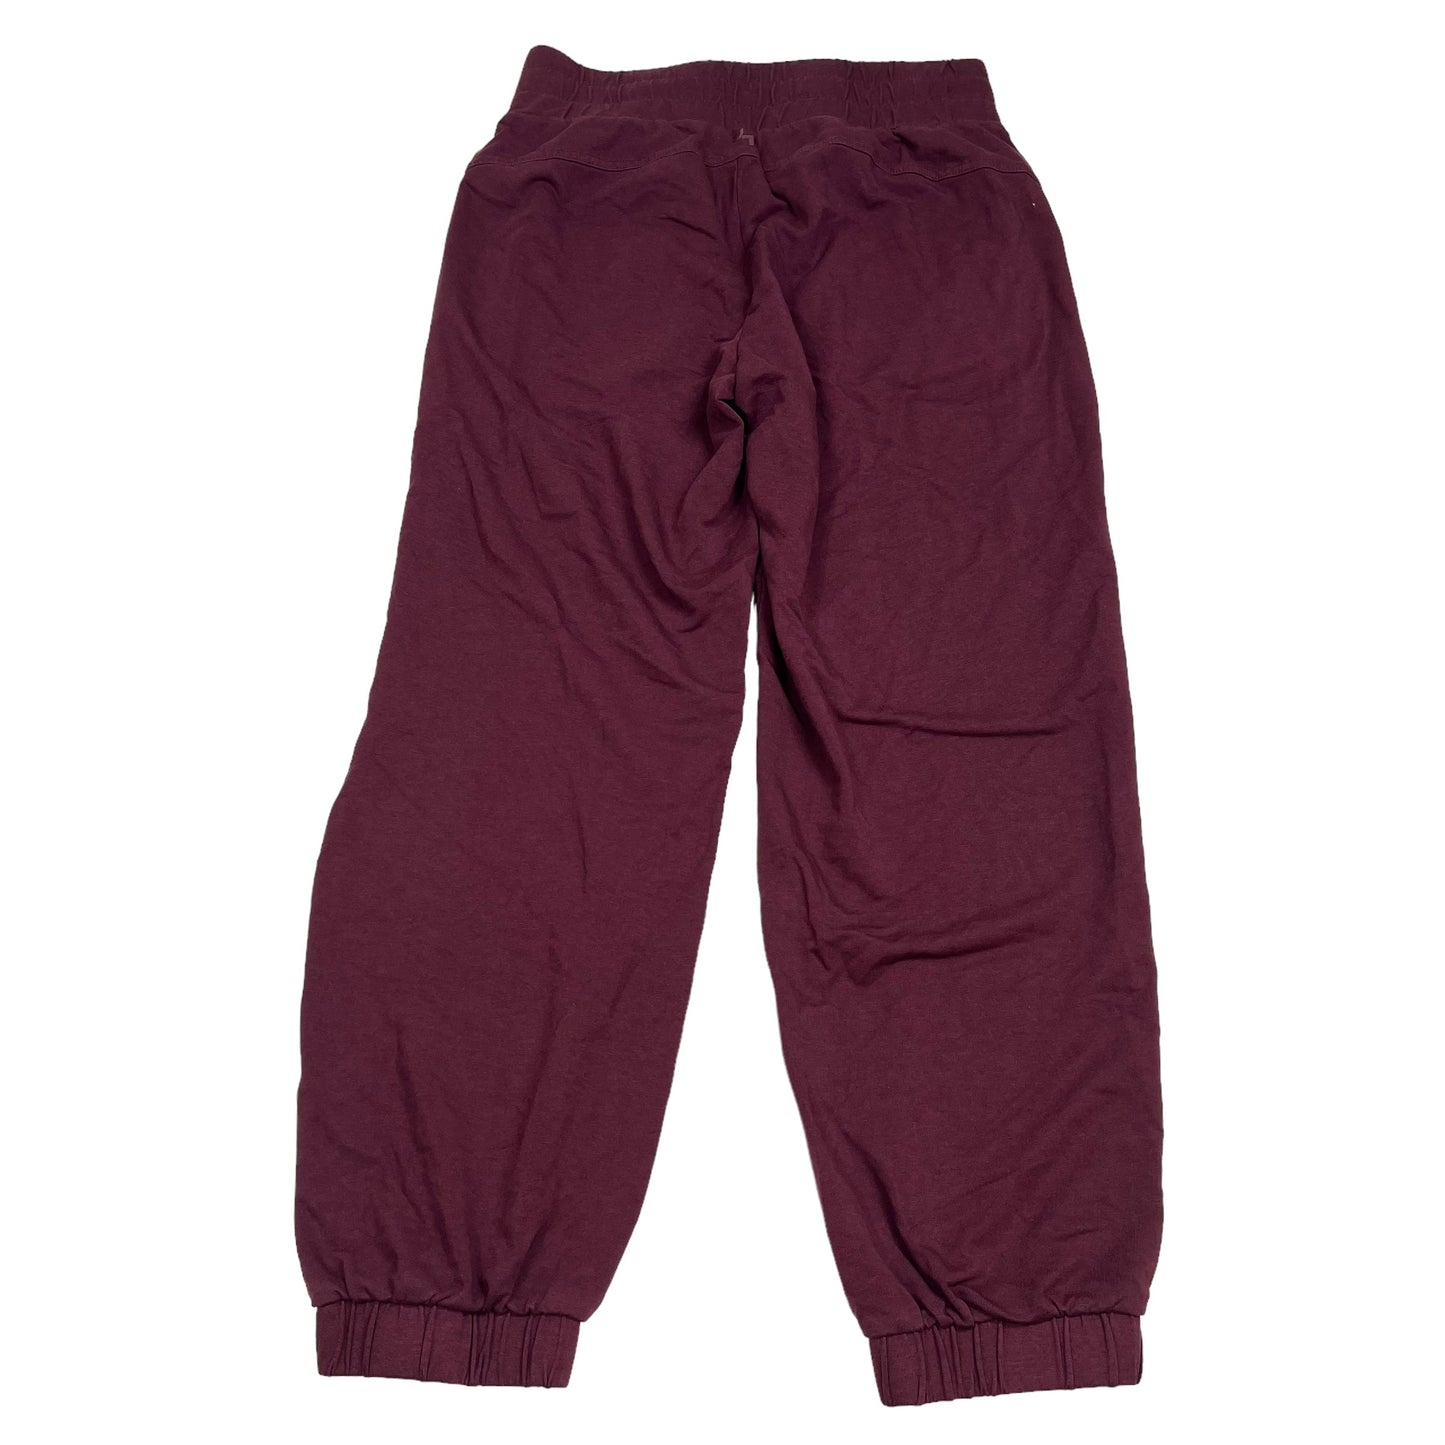 Athletic Pants By Joy Lab  Size: M